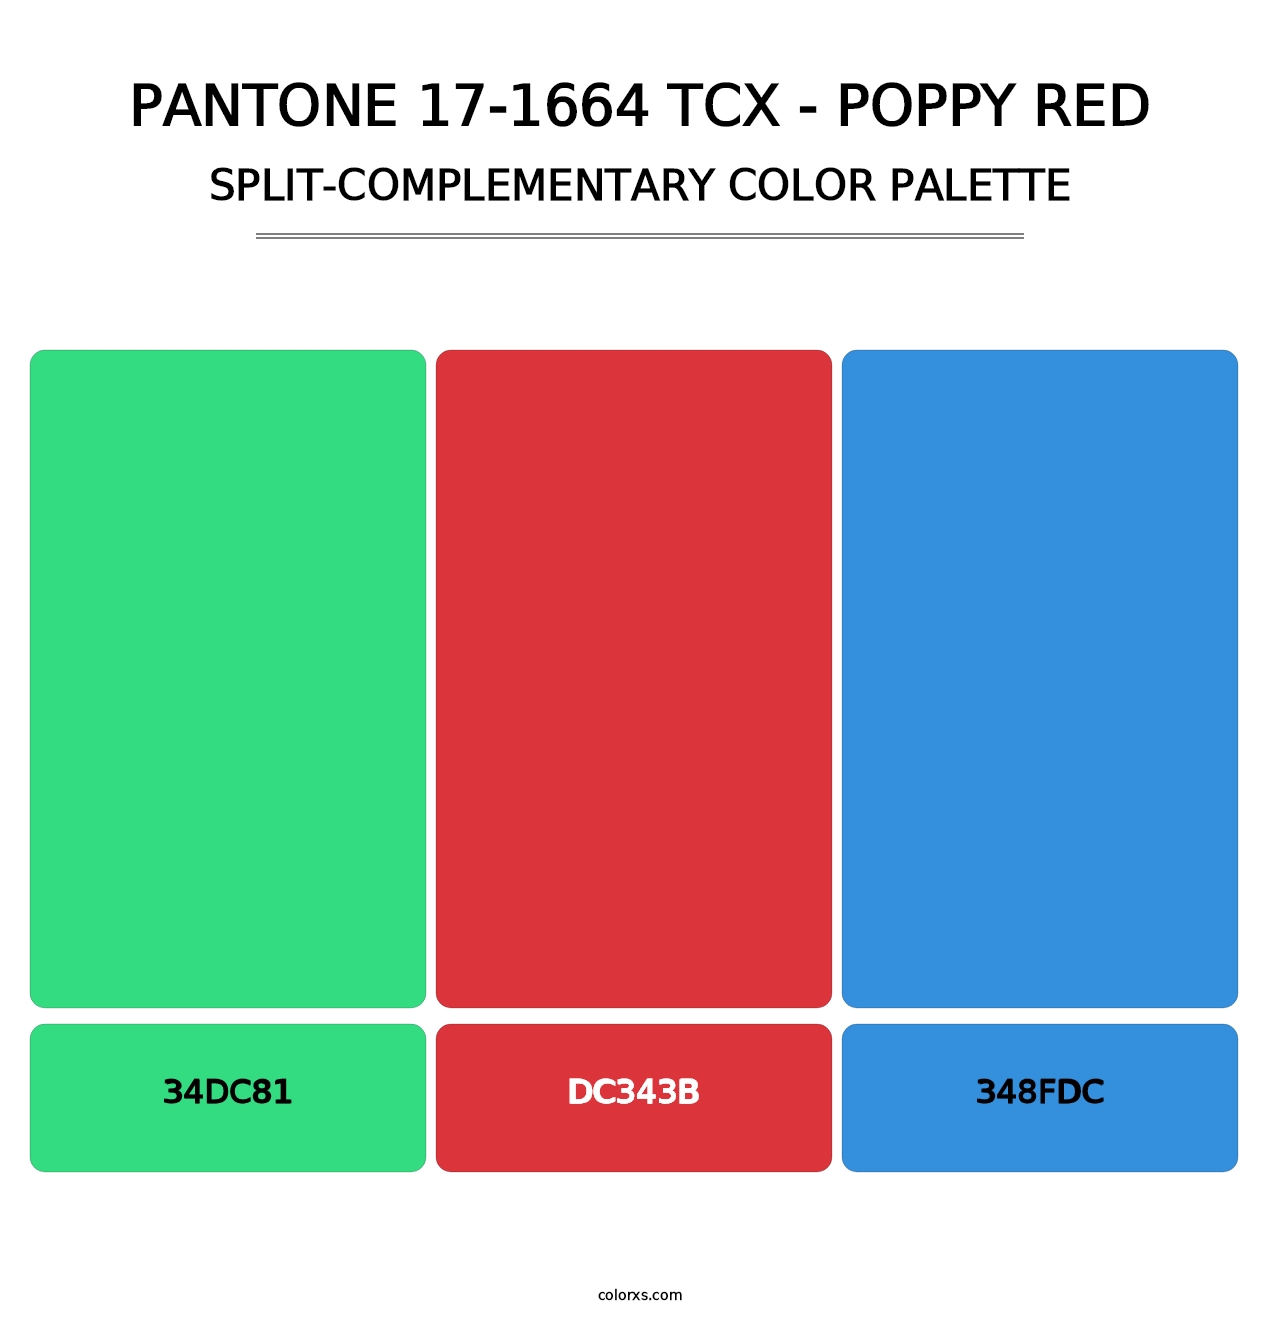 PANTONE 17-1664 TCX - Poppy Red - Split-Complementary Color Palette